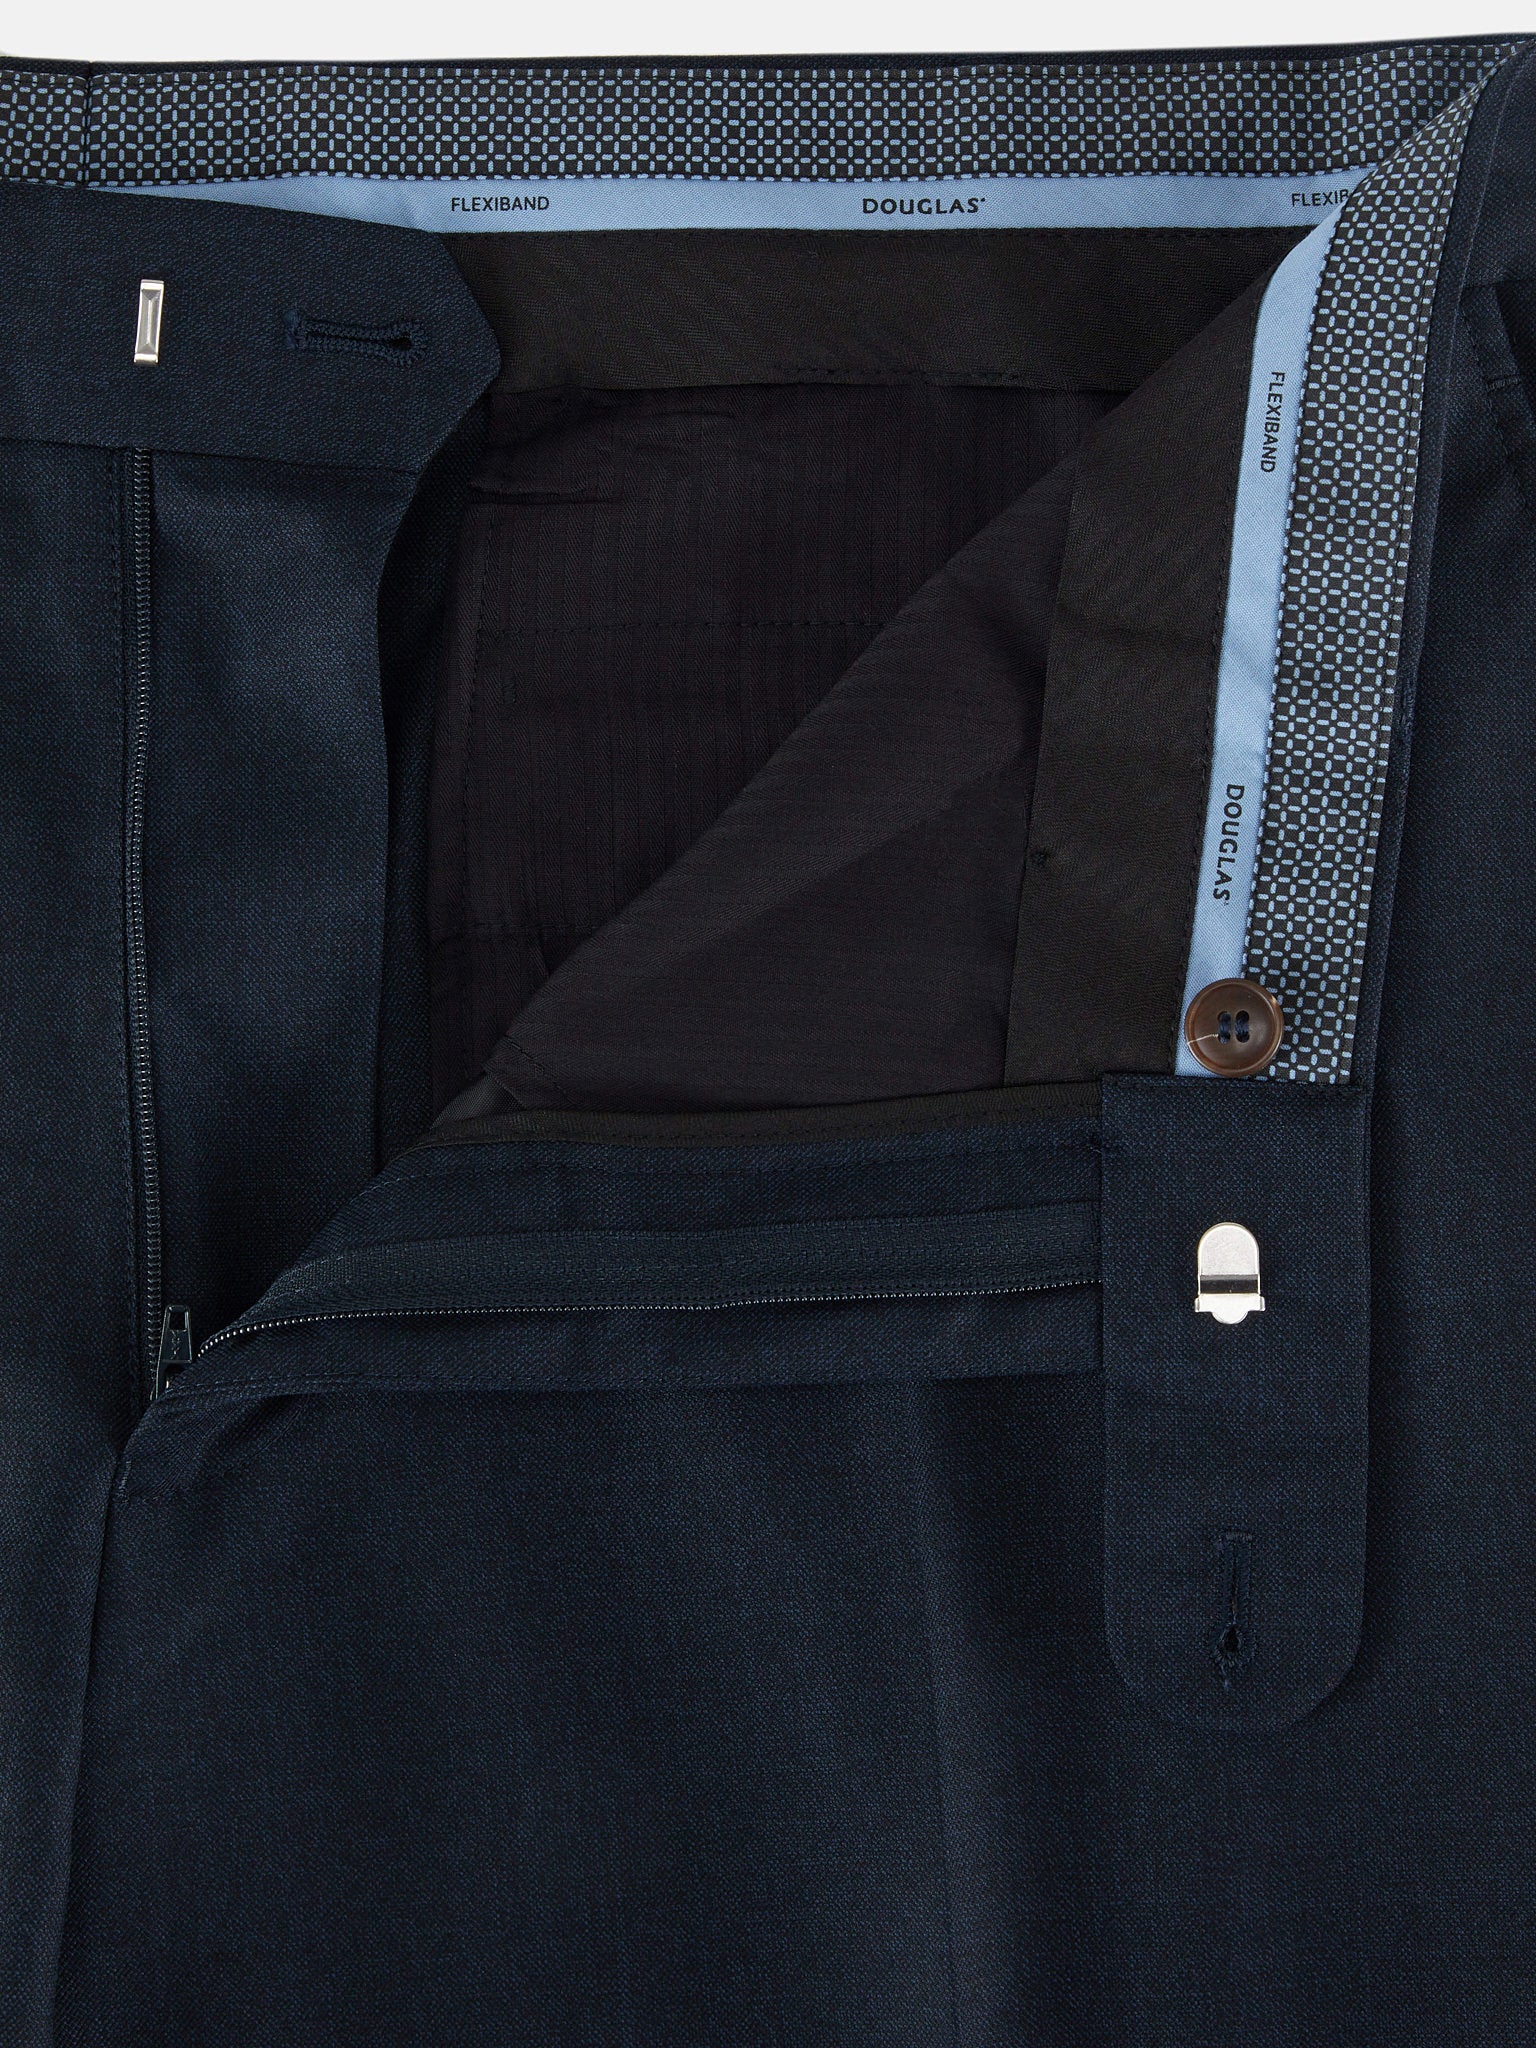 Douglas Valdino Dark Blue Mix & Match Suit Trousers Long Length